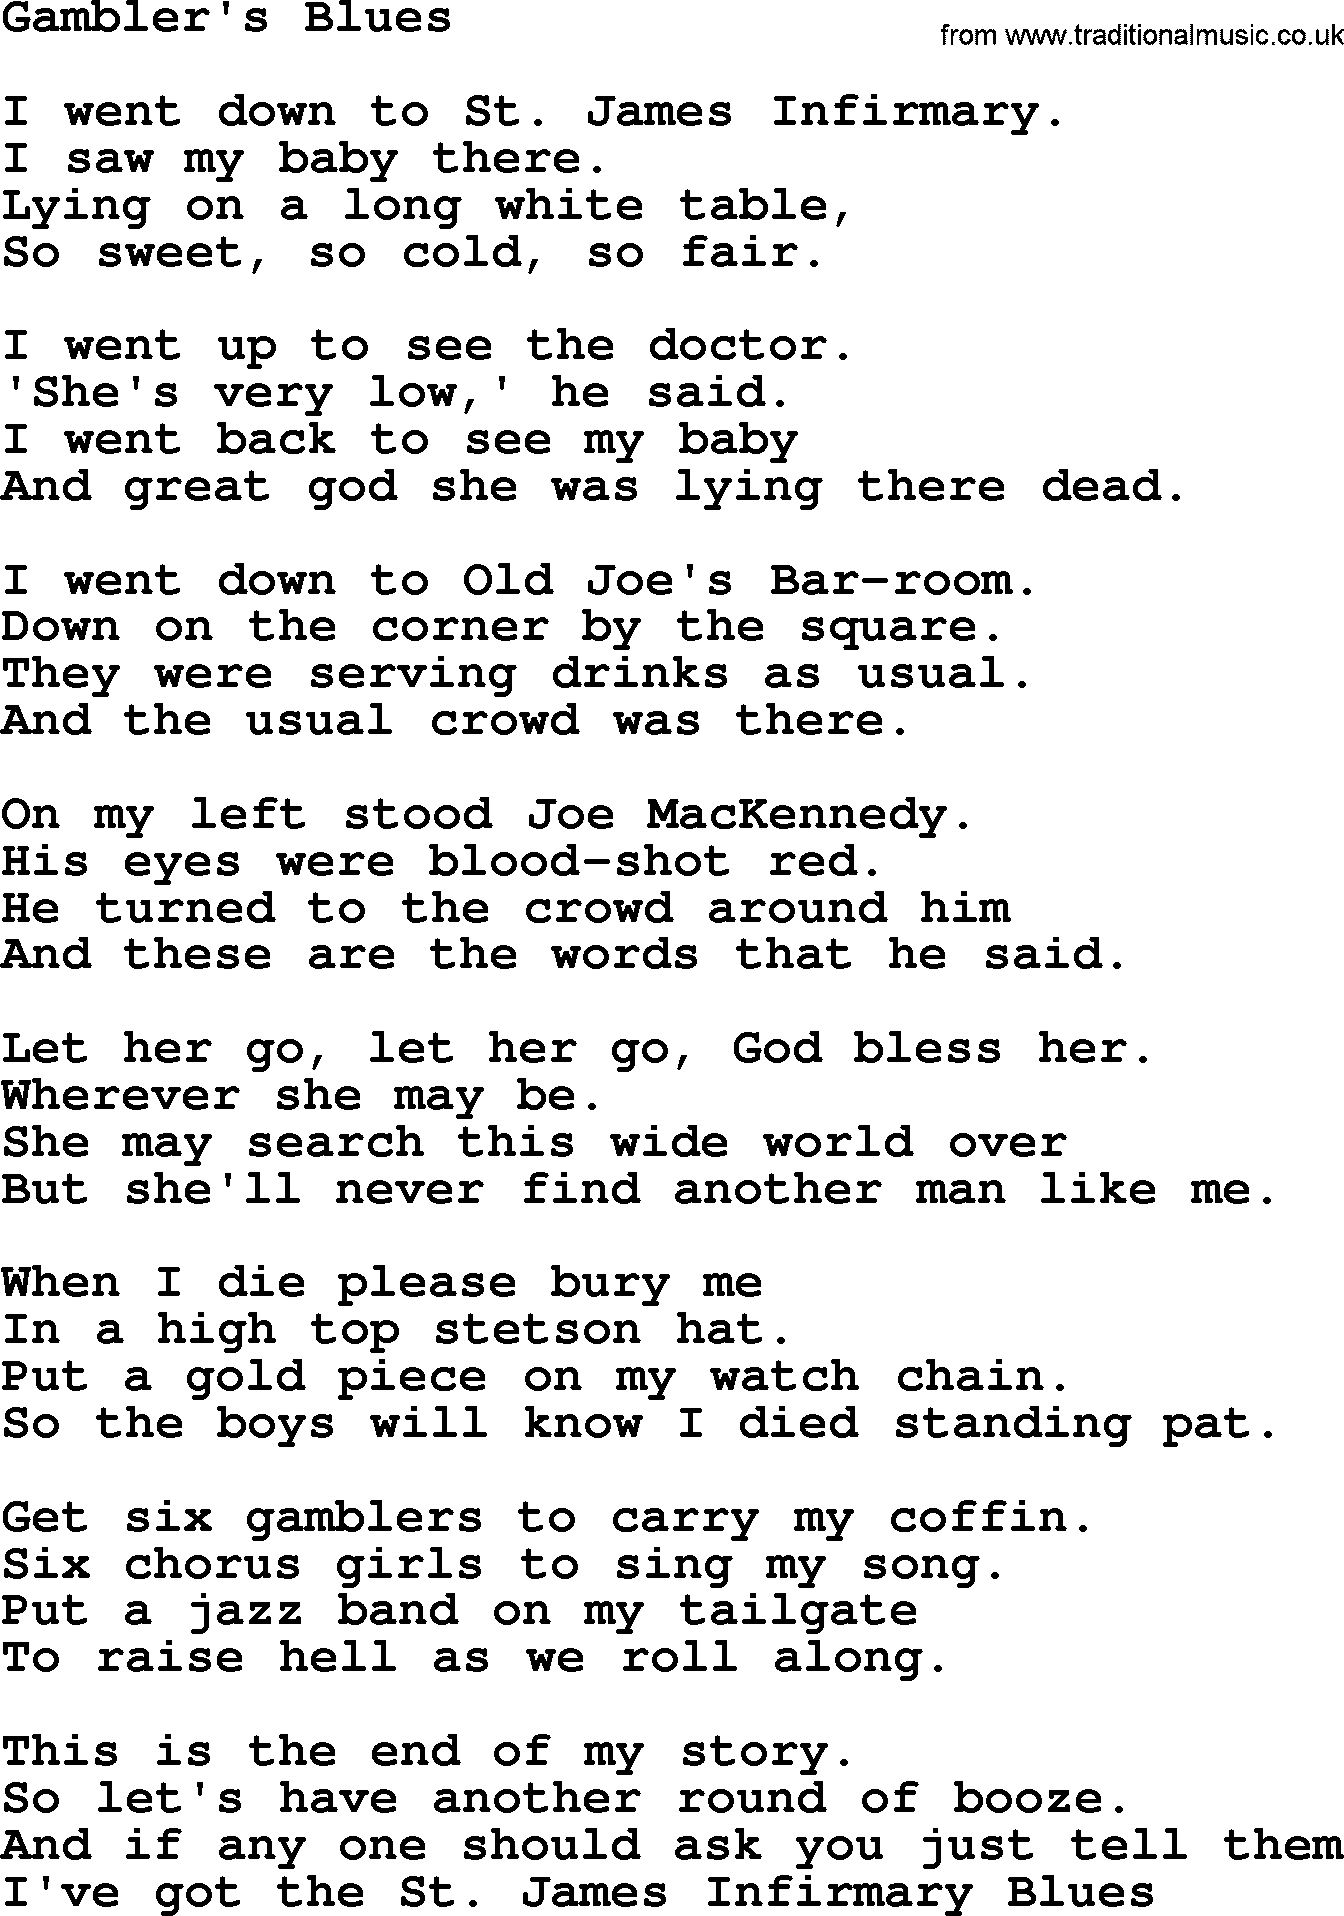 The Byrds song Gambler's Blues, lyrics